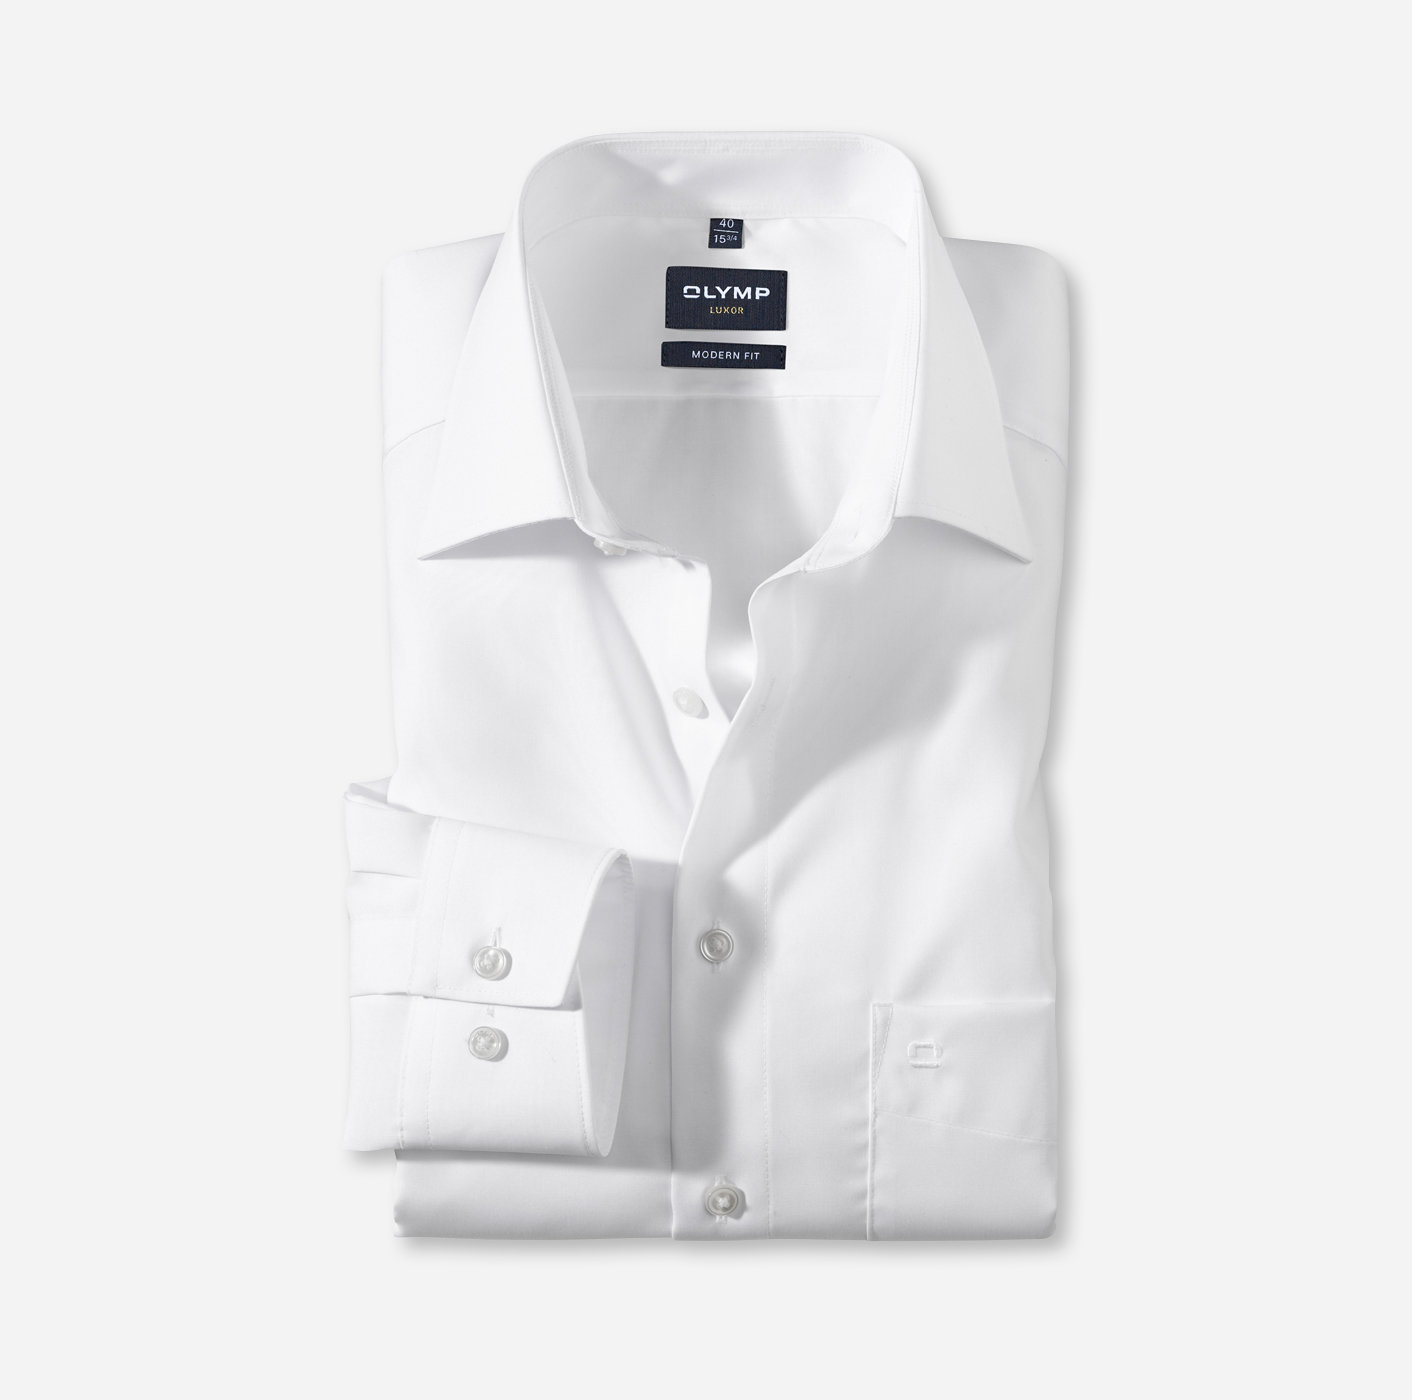 03006900 | New Arm, - fit, Luxor, | Kent OLYMP Businesshemd Extra langer Weiß modern